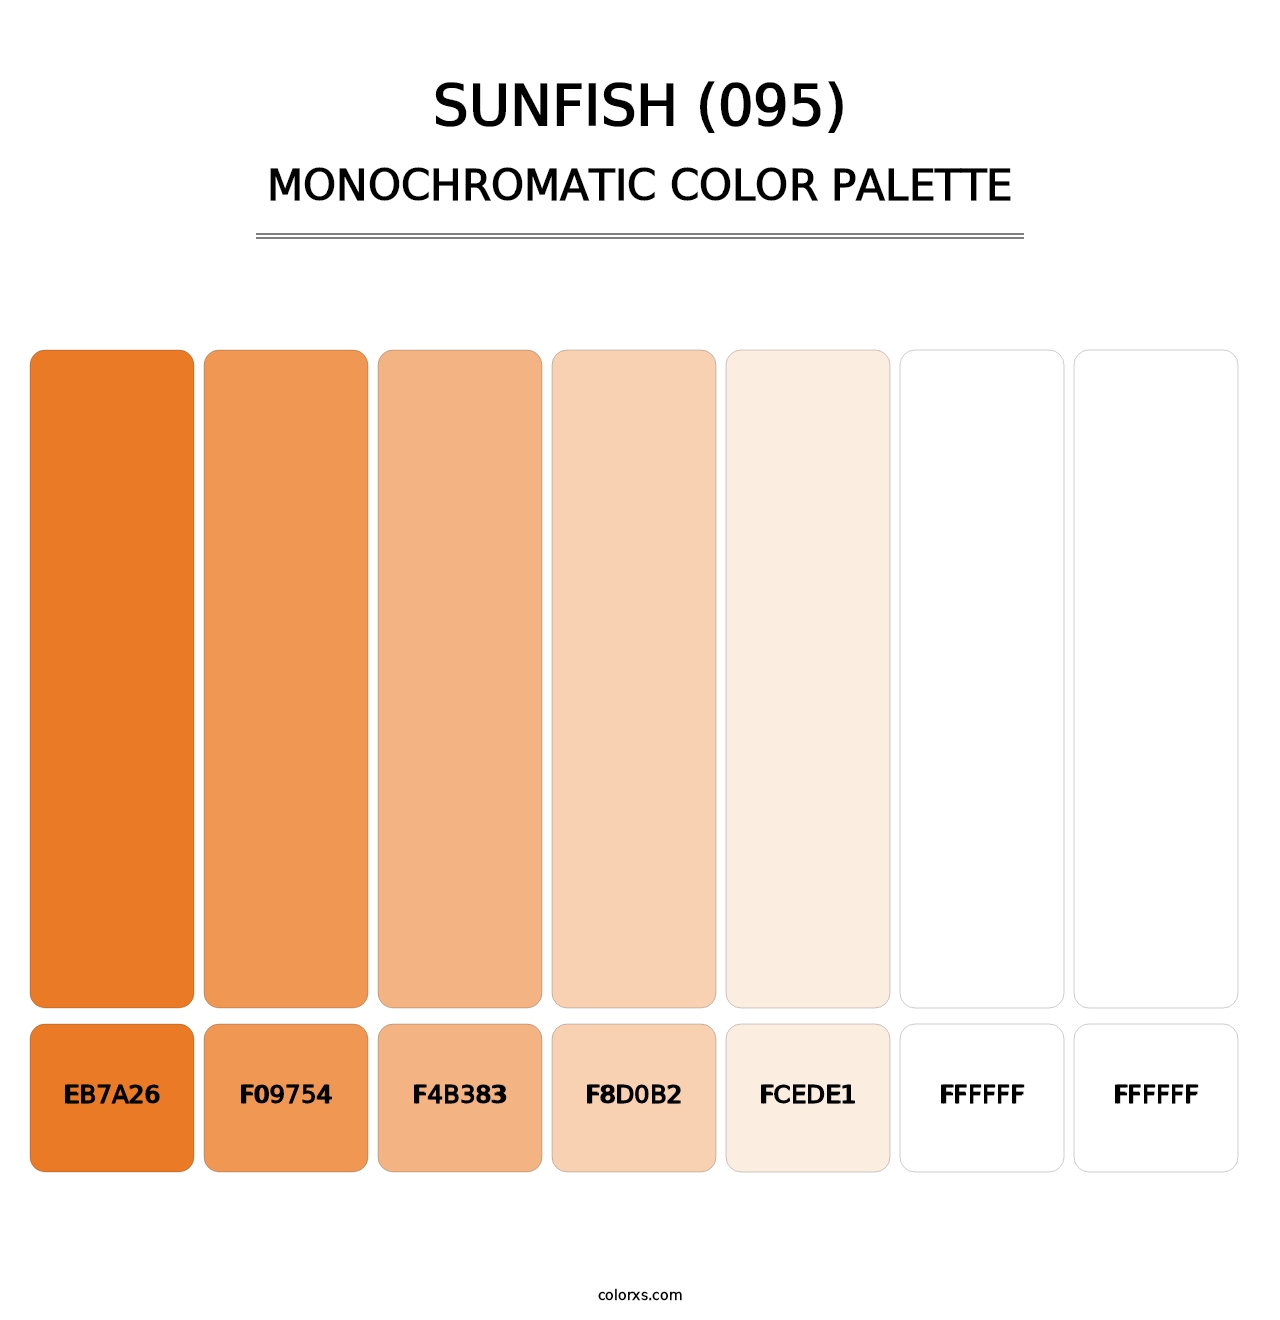 Sunfish (095) - Monochromatic Color Palette